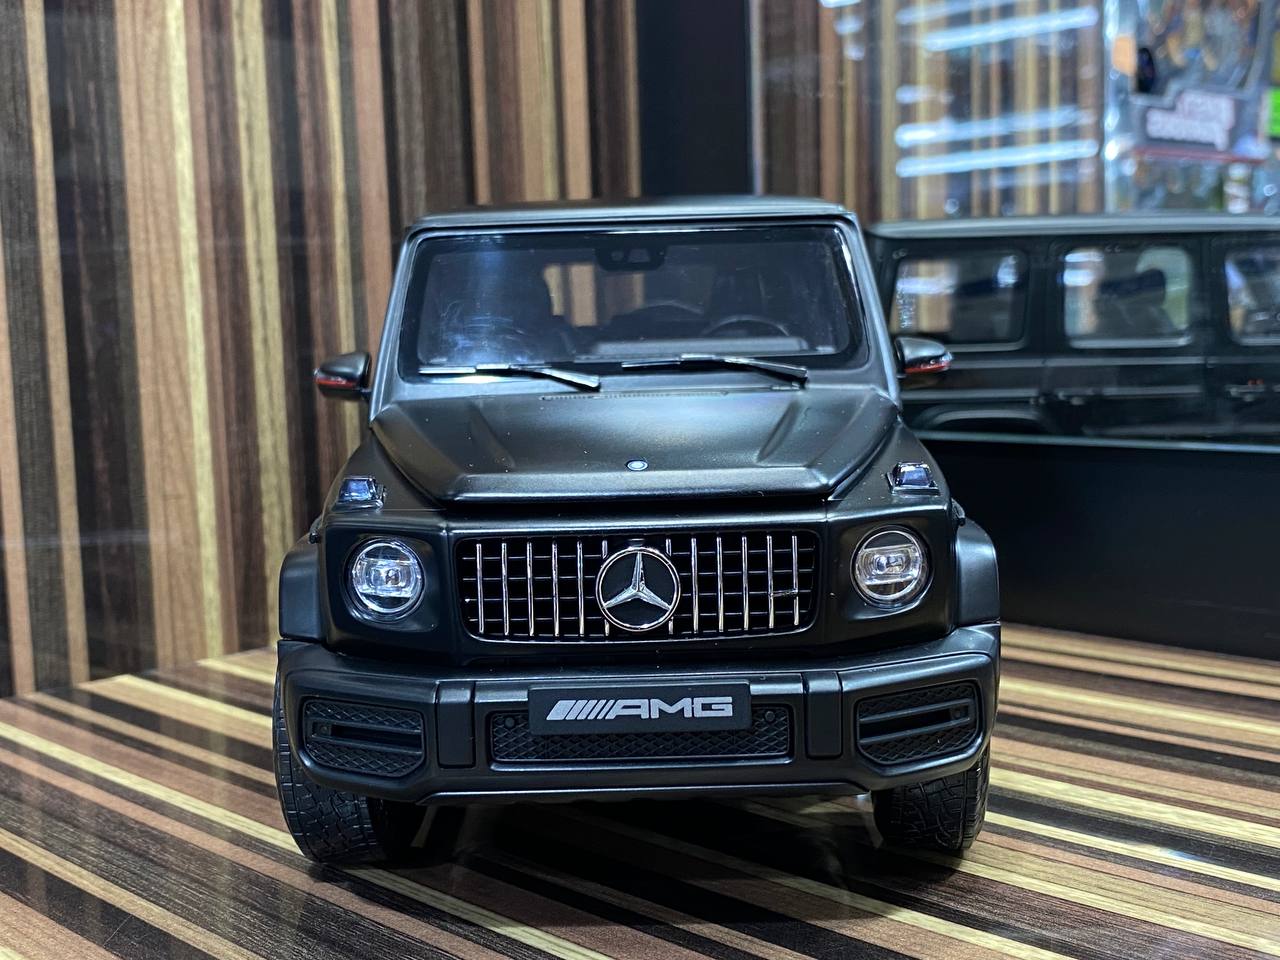 1/18 Mercedes Benz AMG G63 Red Interior 2018 Black by Mini Champs|Sold in Dturman.com Dubai UAE.